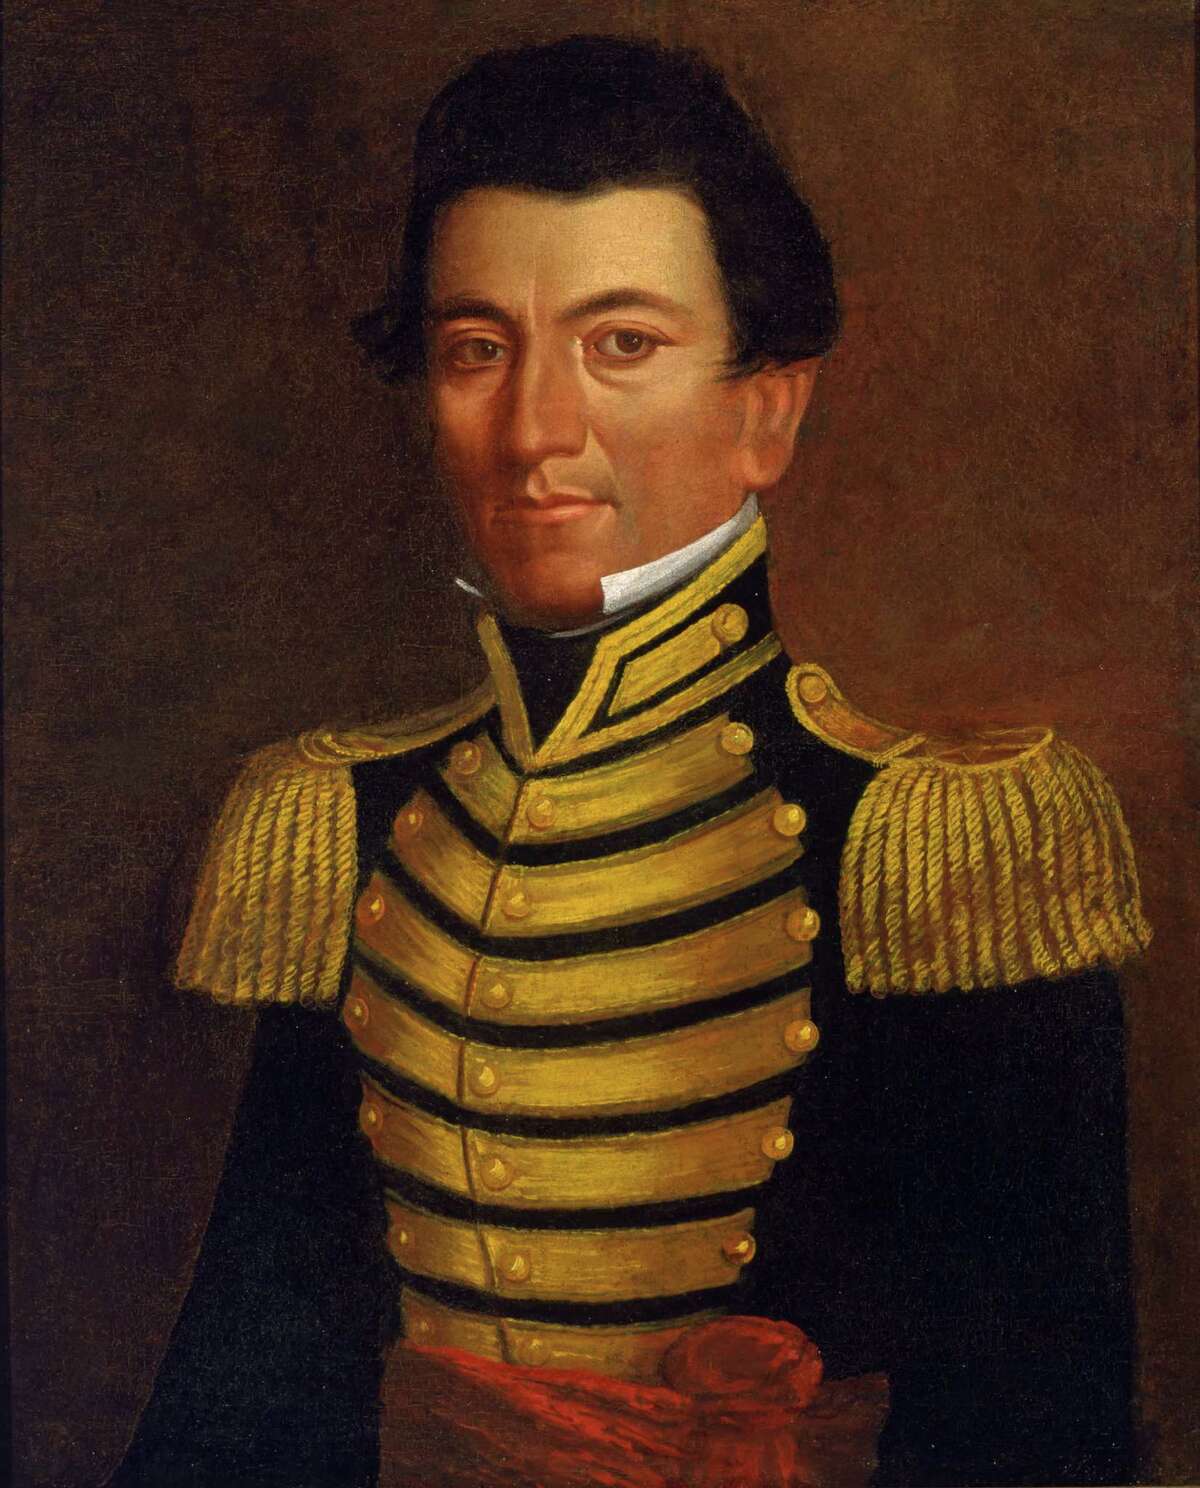 Juan Seguin, a hero of the Texas Revolution, was San Antonio's first Hispanic mayor.